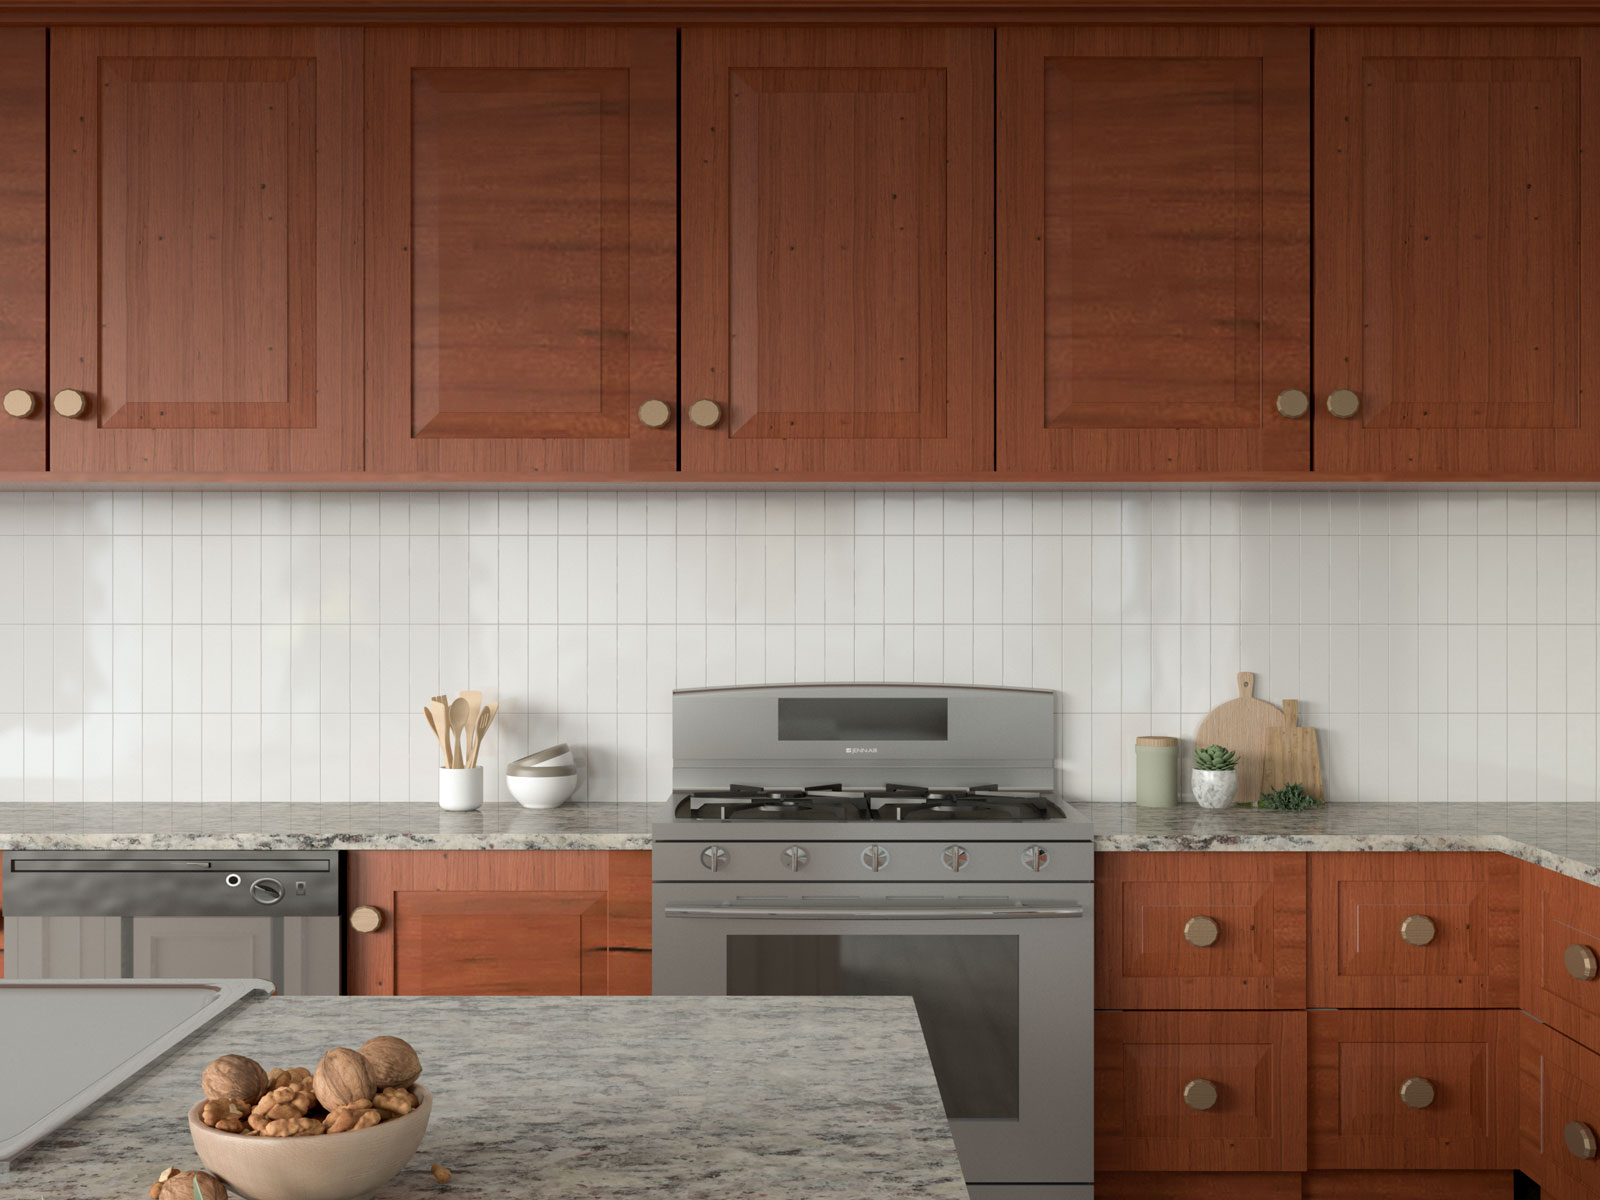 Cherry kitchen cabinets with white tile backsplash